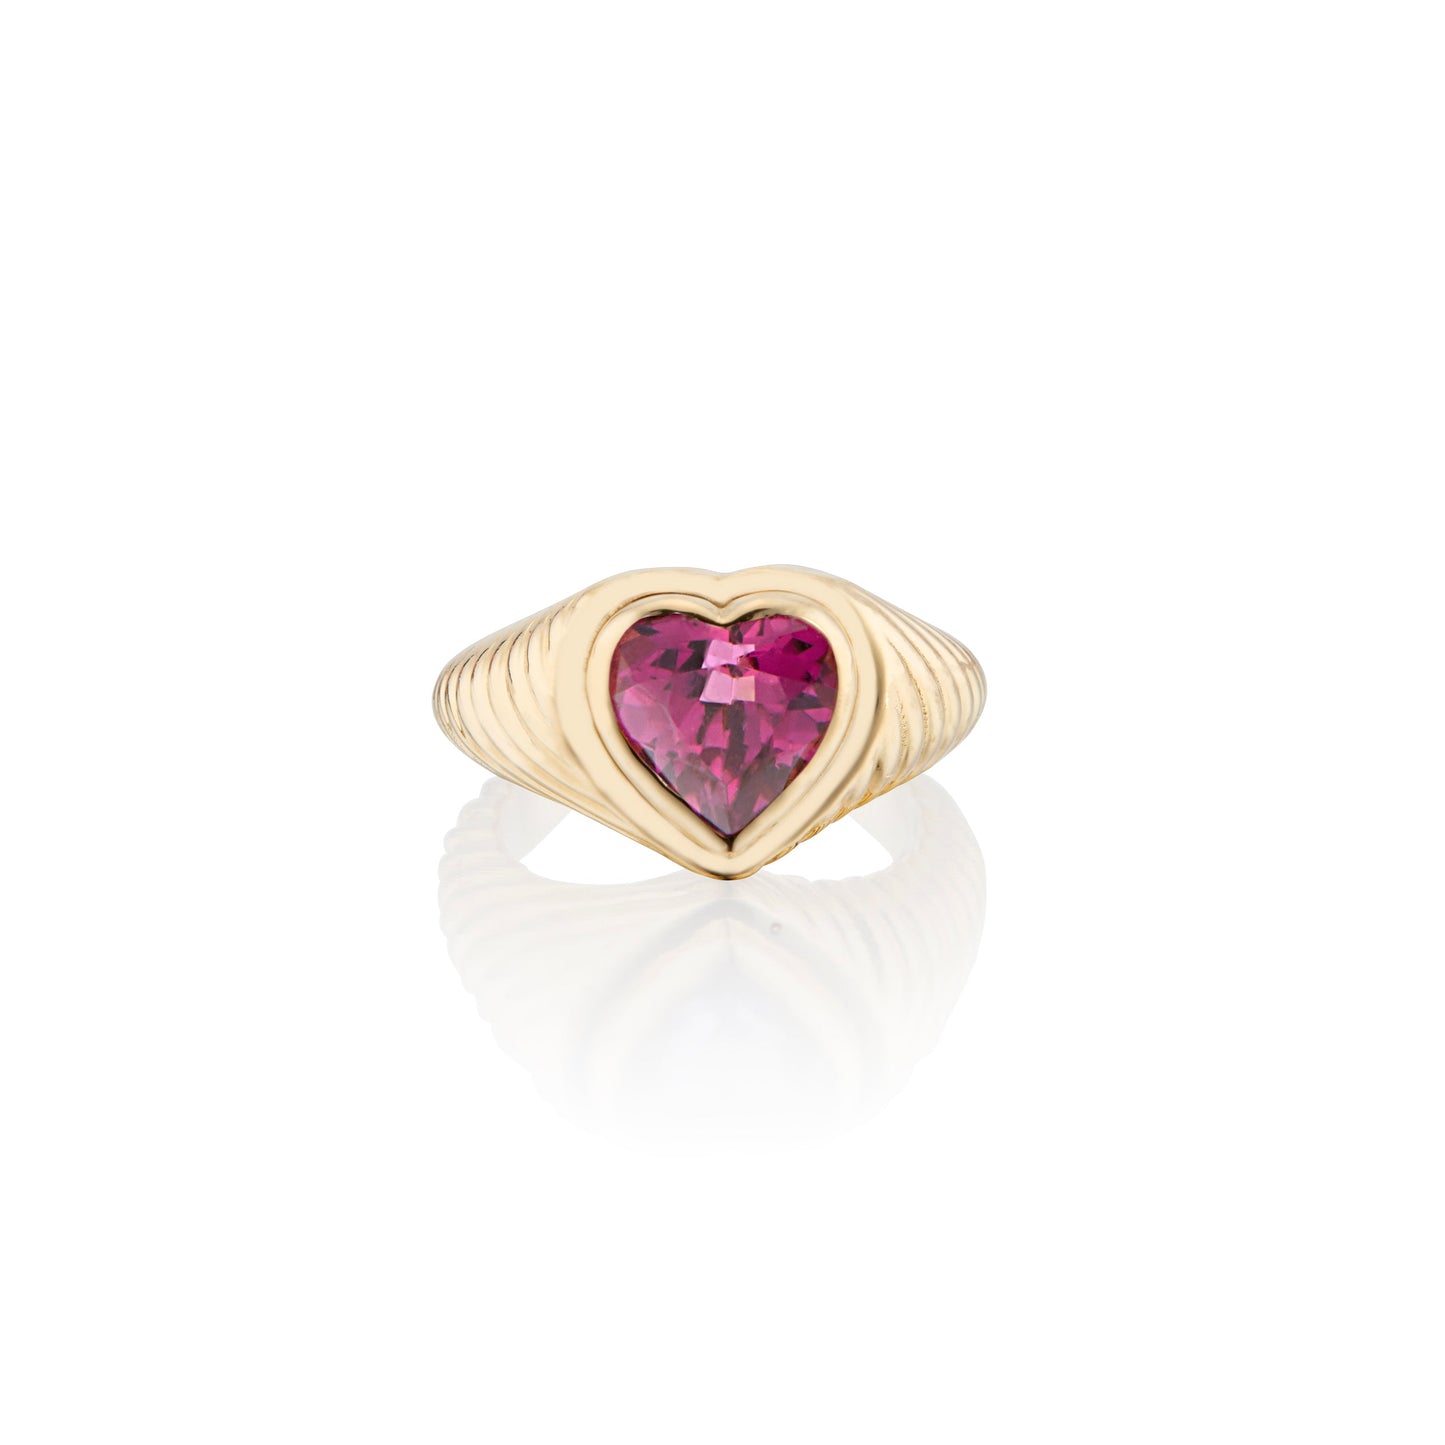 Eden Love Signet Pinky Ring with Pink Tourmaline Gemstone